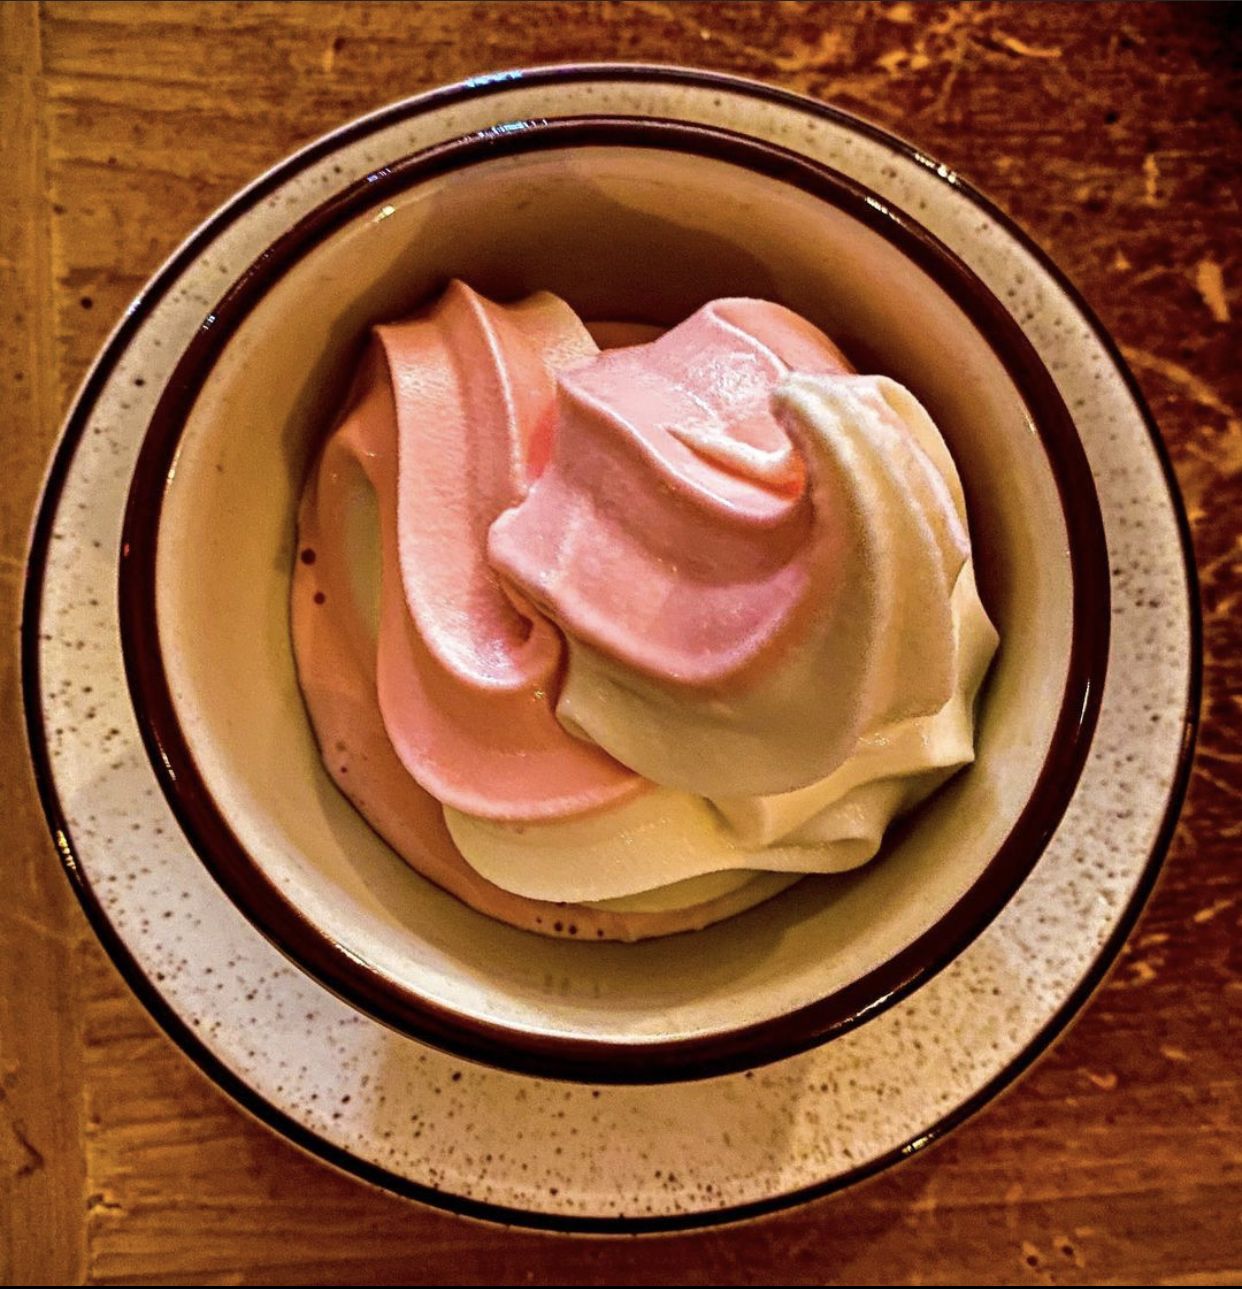 Rose Ice Cream - soft serve